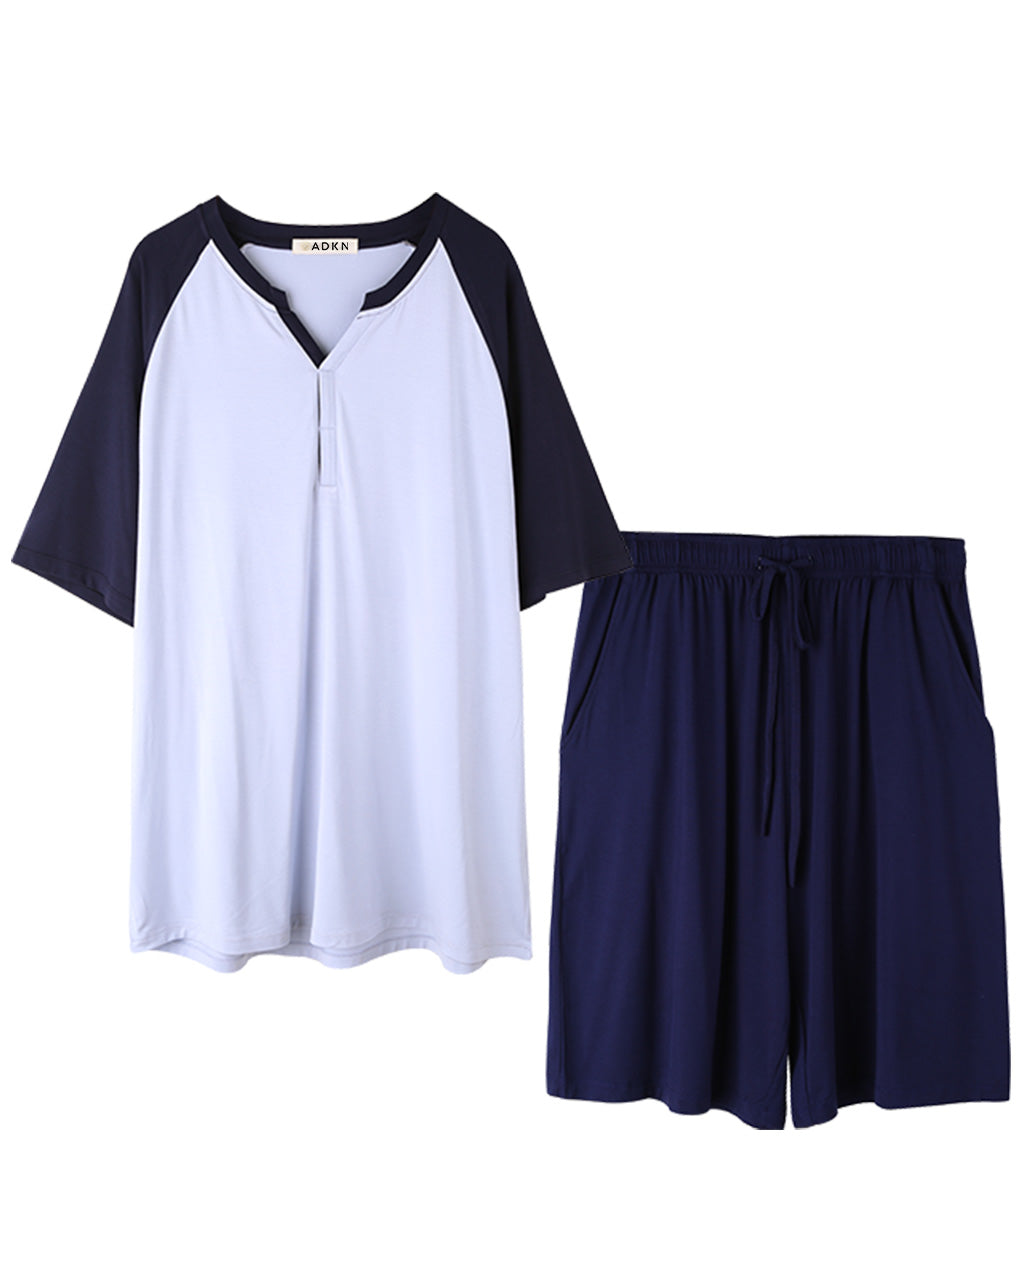 Bamboo Mens Shorts Pyjamas - Summer Sleepwear for Men | ADKN